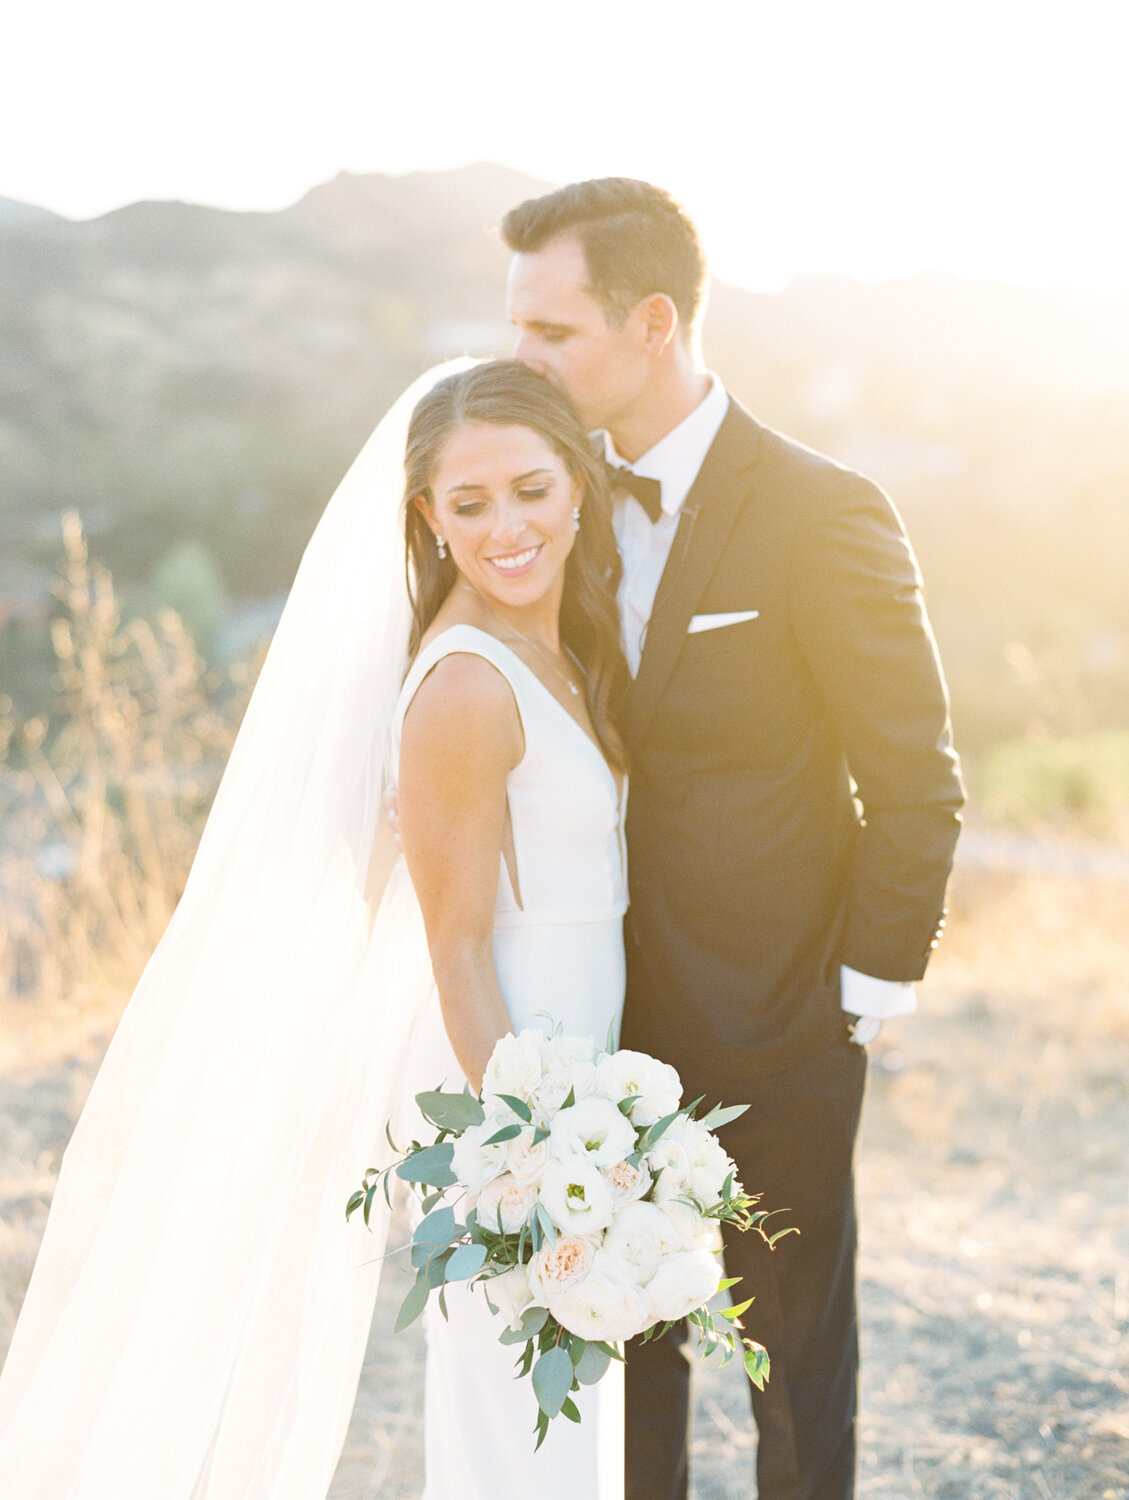 wisteria-photography.com | Wisteria Photography | Triunfo Creek Vineyards | Weddings Engagement | Southern California Photographer-29.jpg